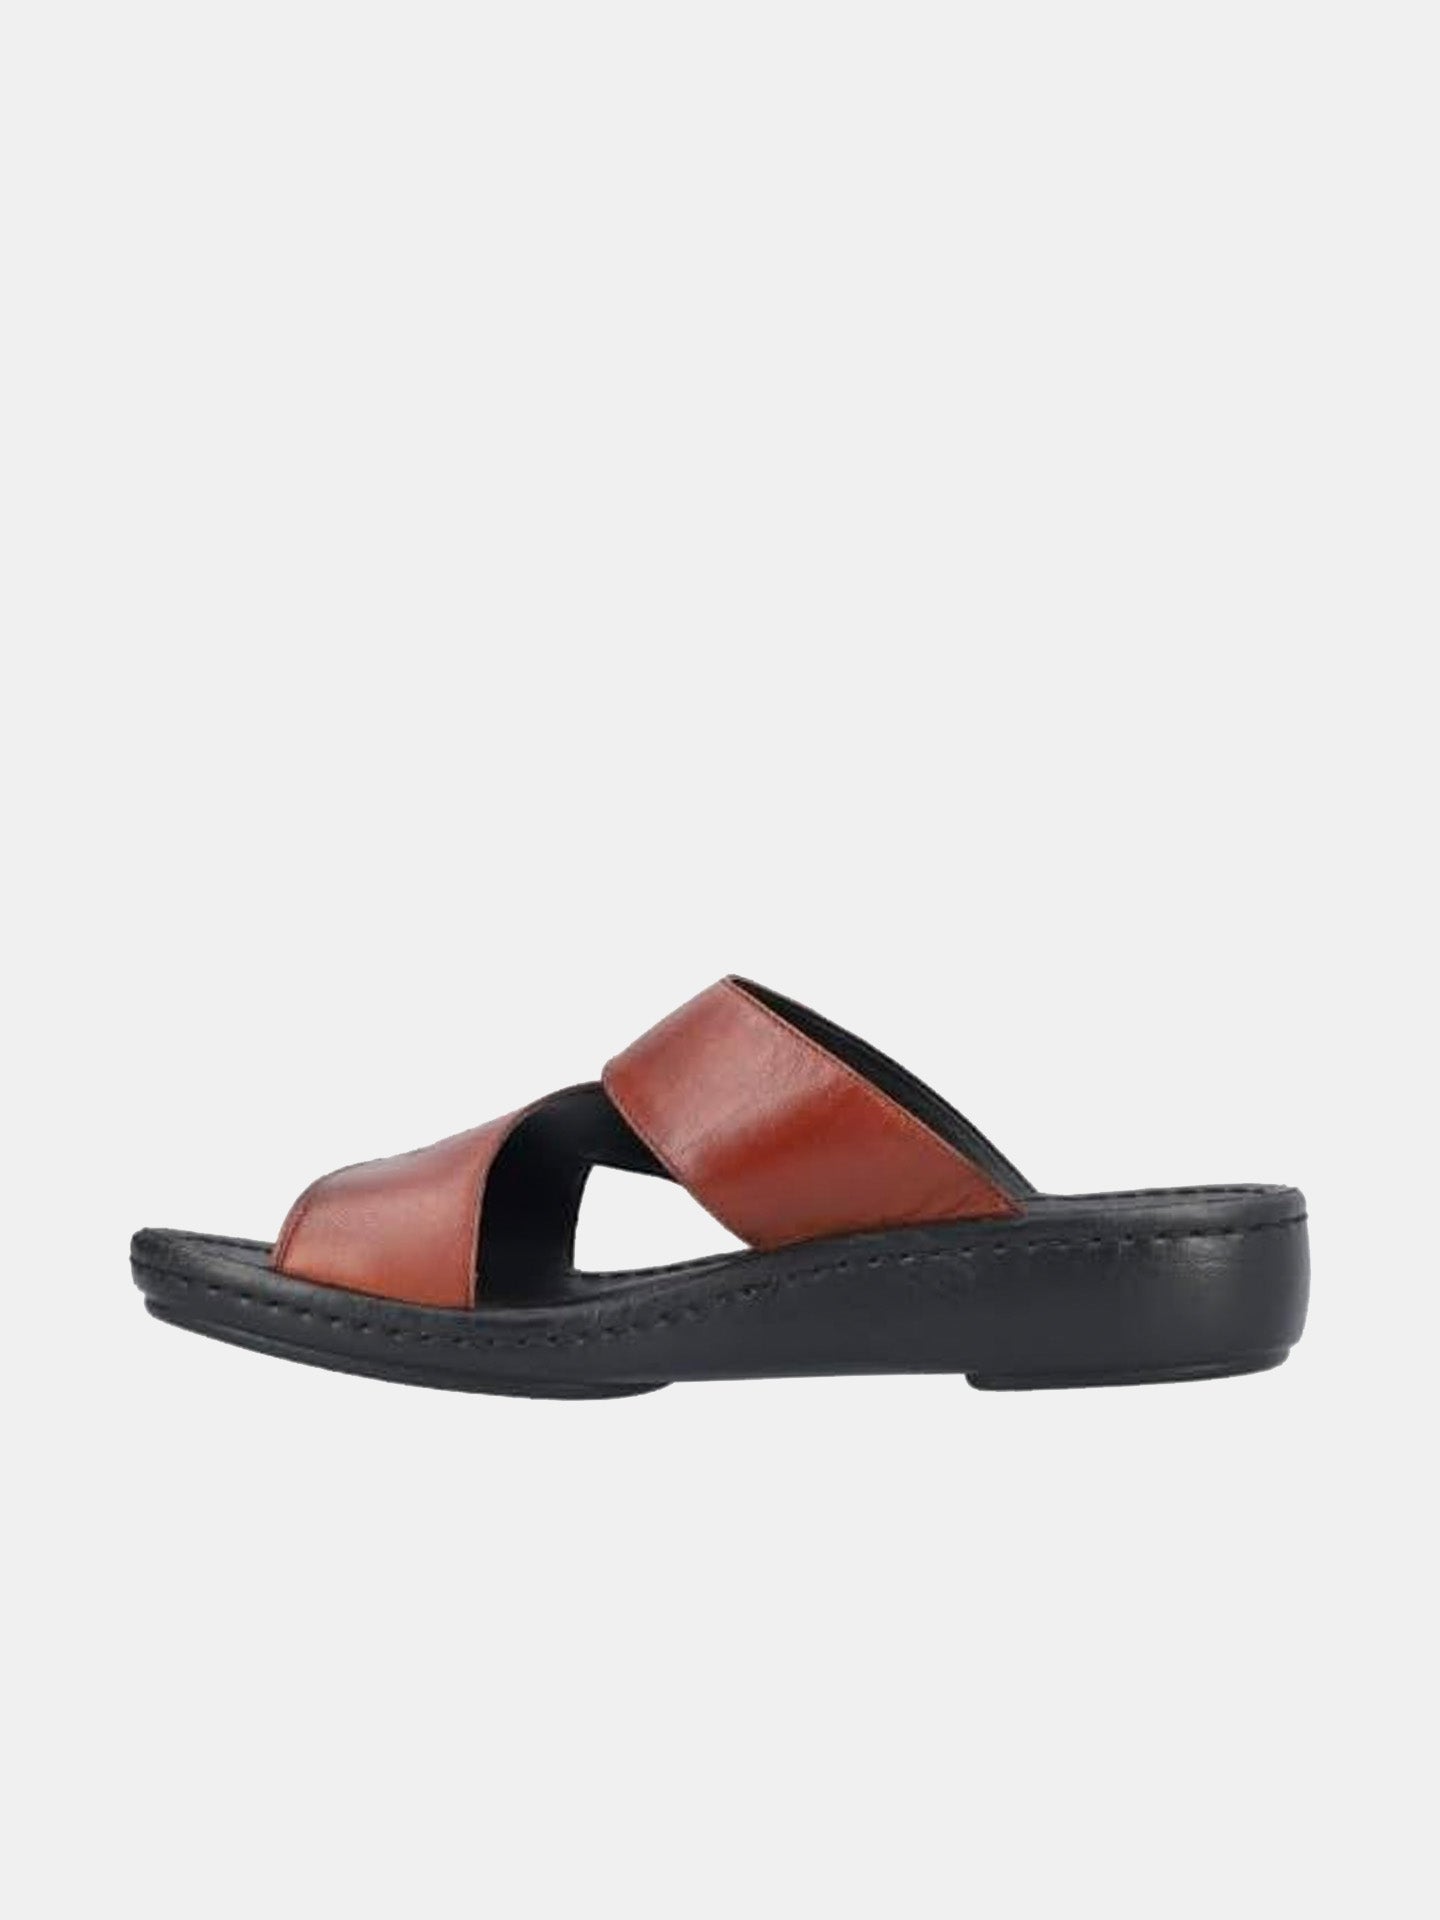 Rieker 23974 Men's Sandals